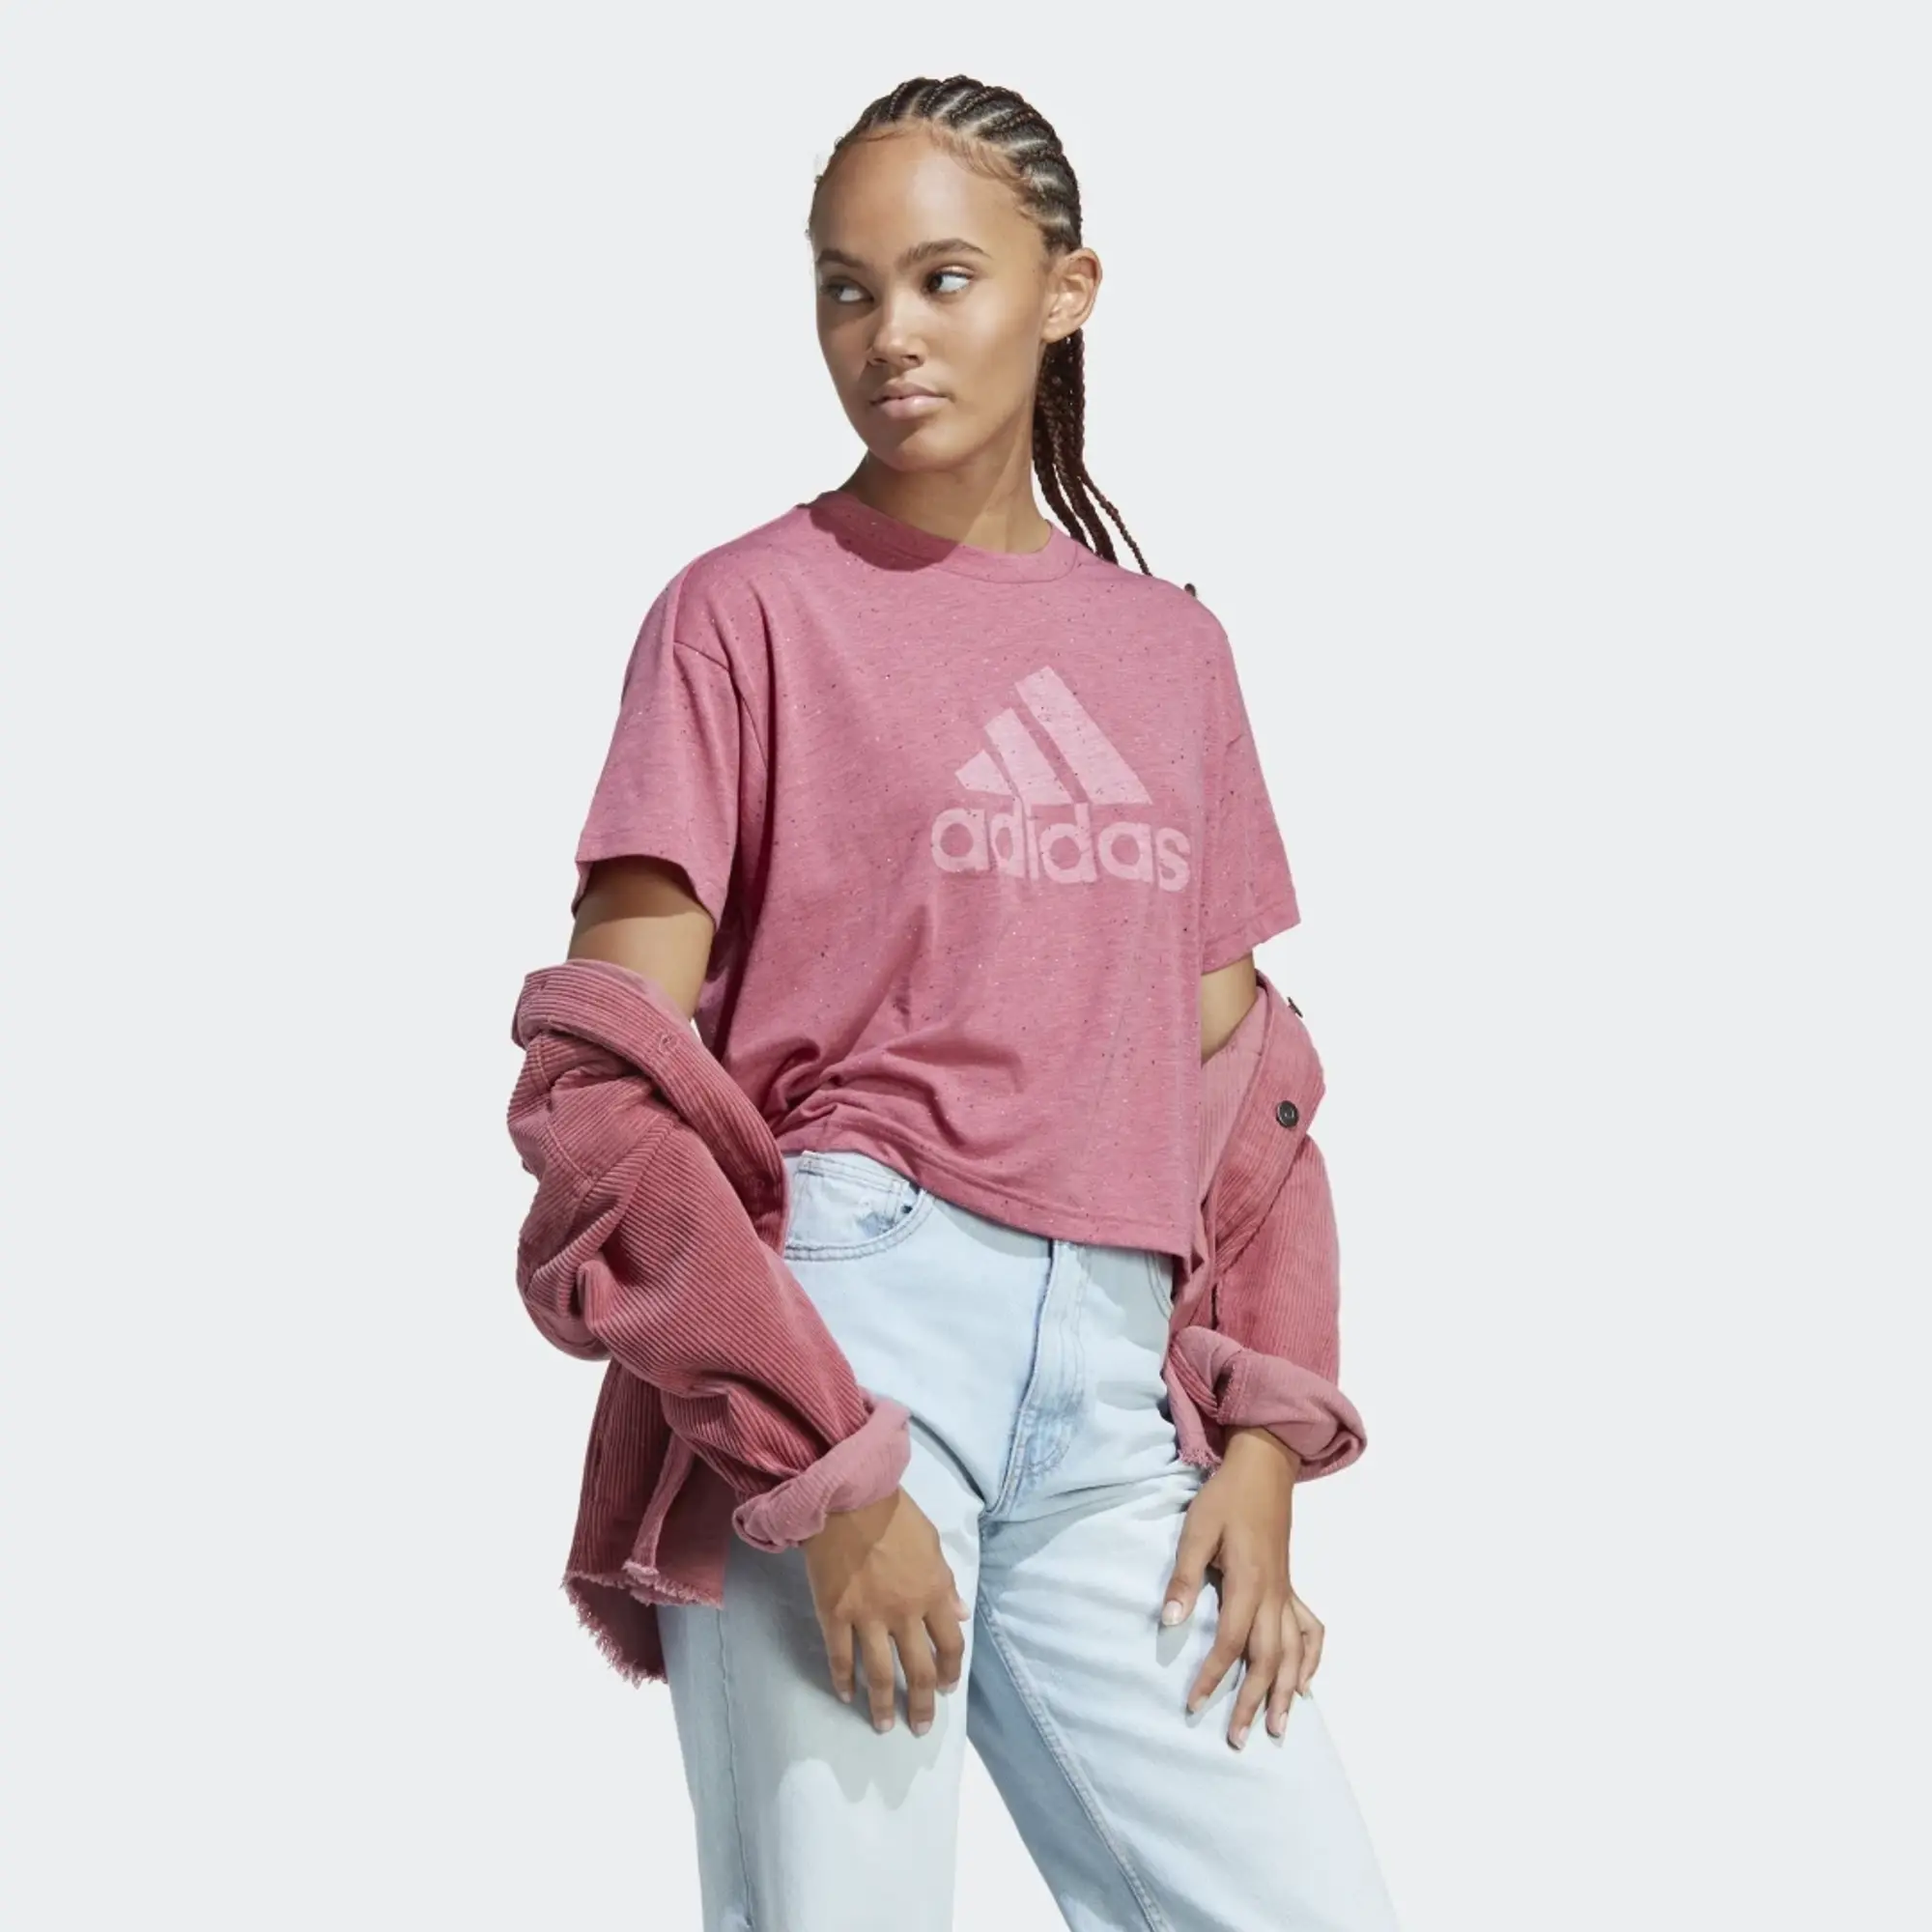 Icons - | T-Shirt Winners IC0493 Pink Mel. White Strata adidas Future /